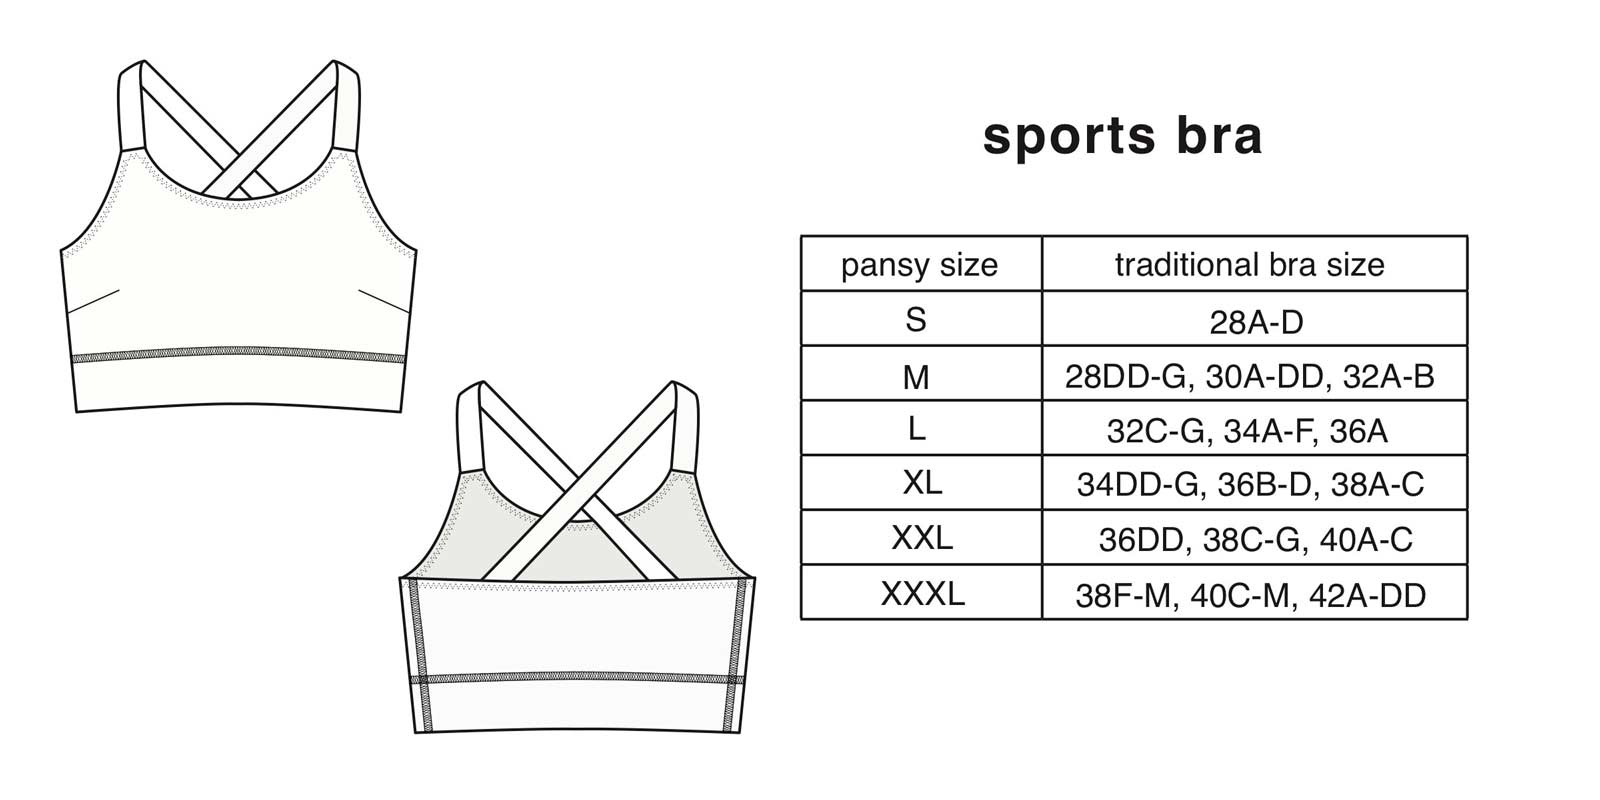 pansy sports bra sizing